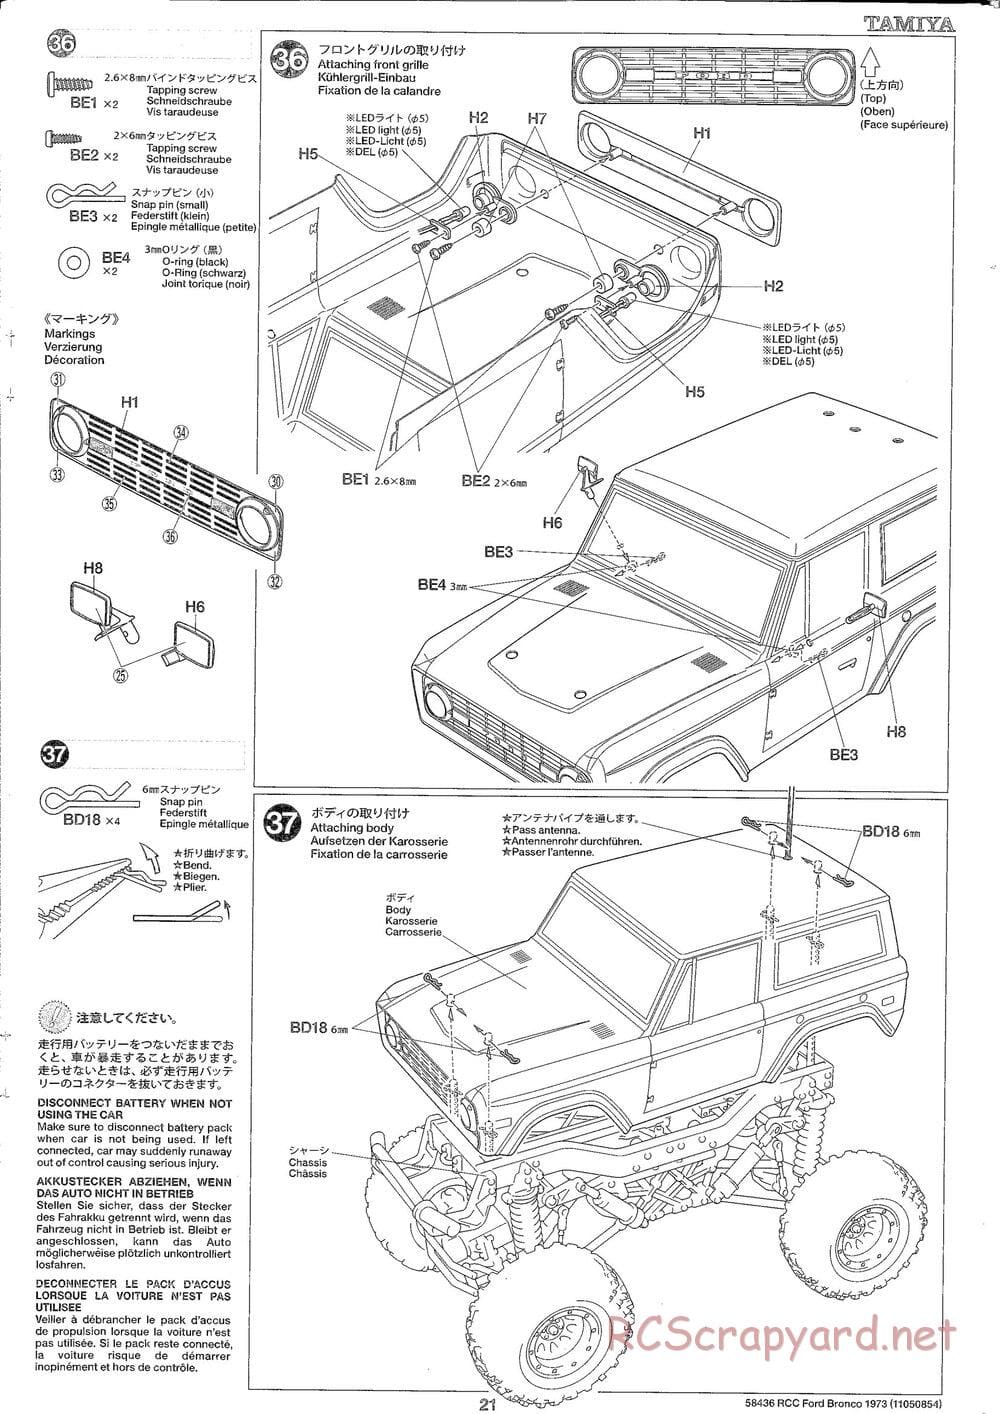 Tamiya - Ford Bronco 1973 - CR-01 Chassis - Manual - Page 21